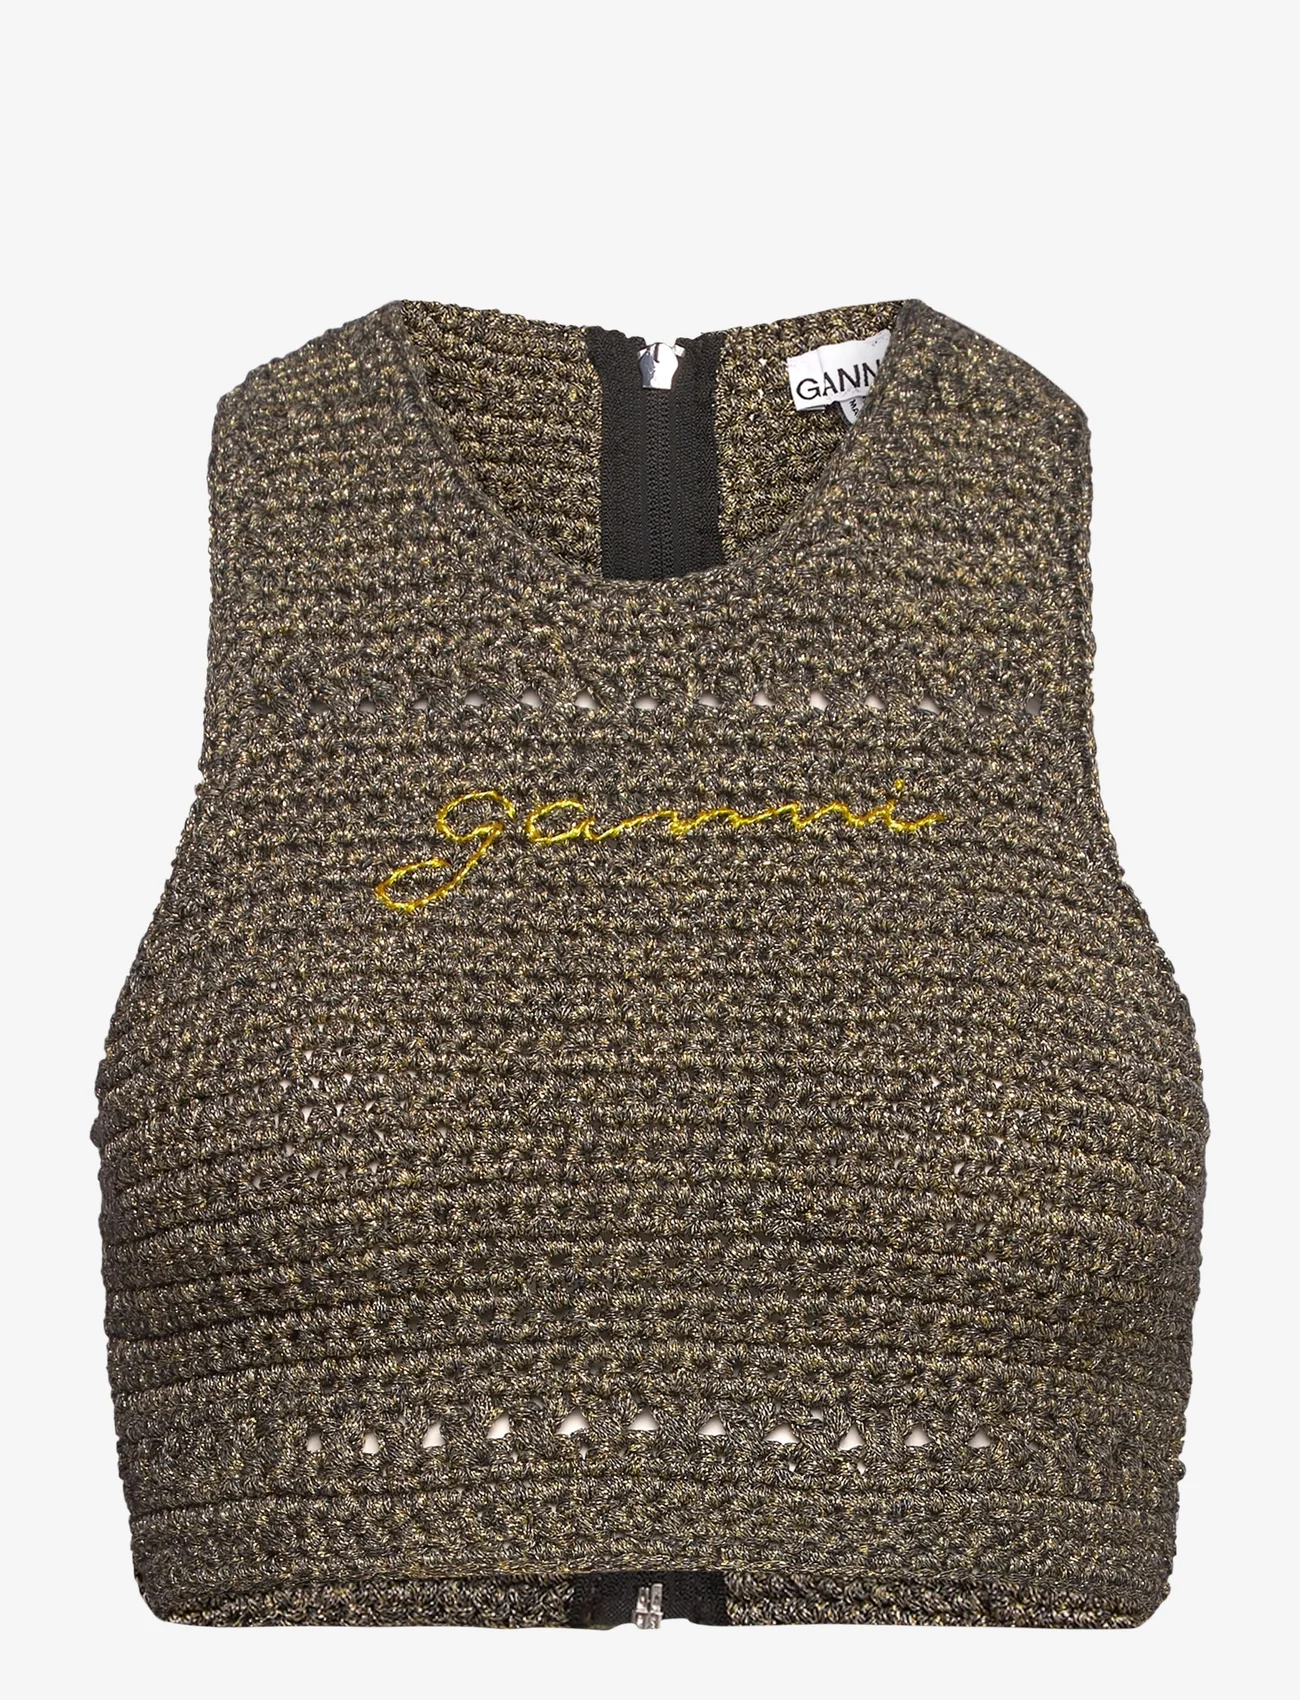 Ganni - Crochet Racerback Top - bandeau-bikini-oberteile - black/gold - 0